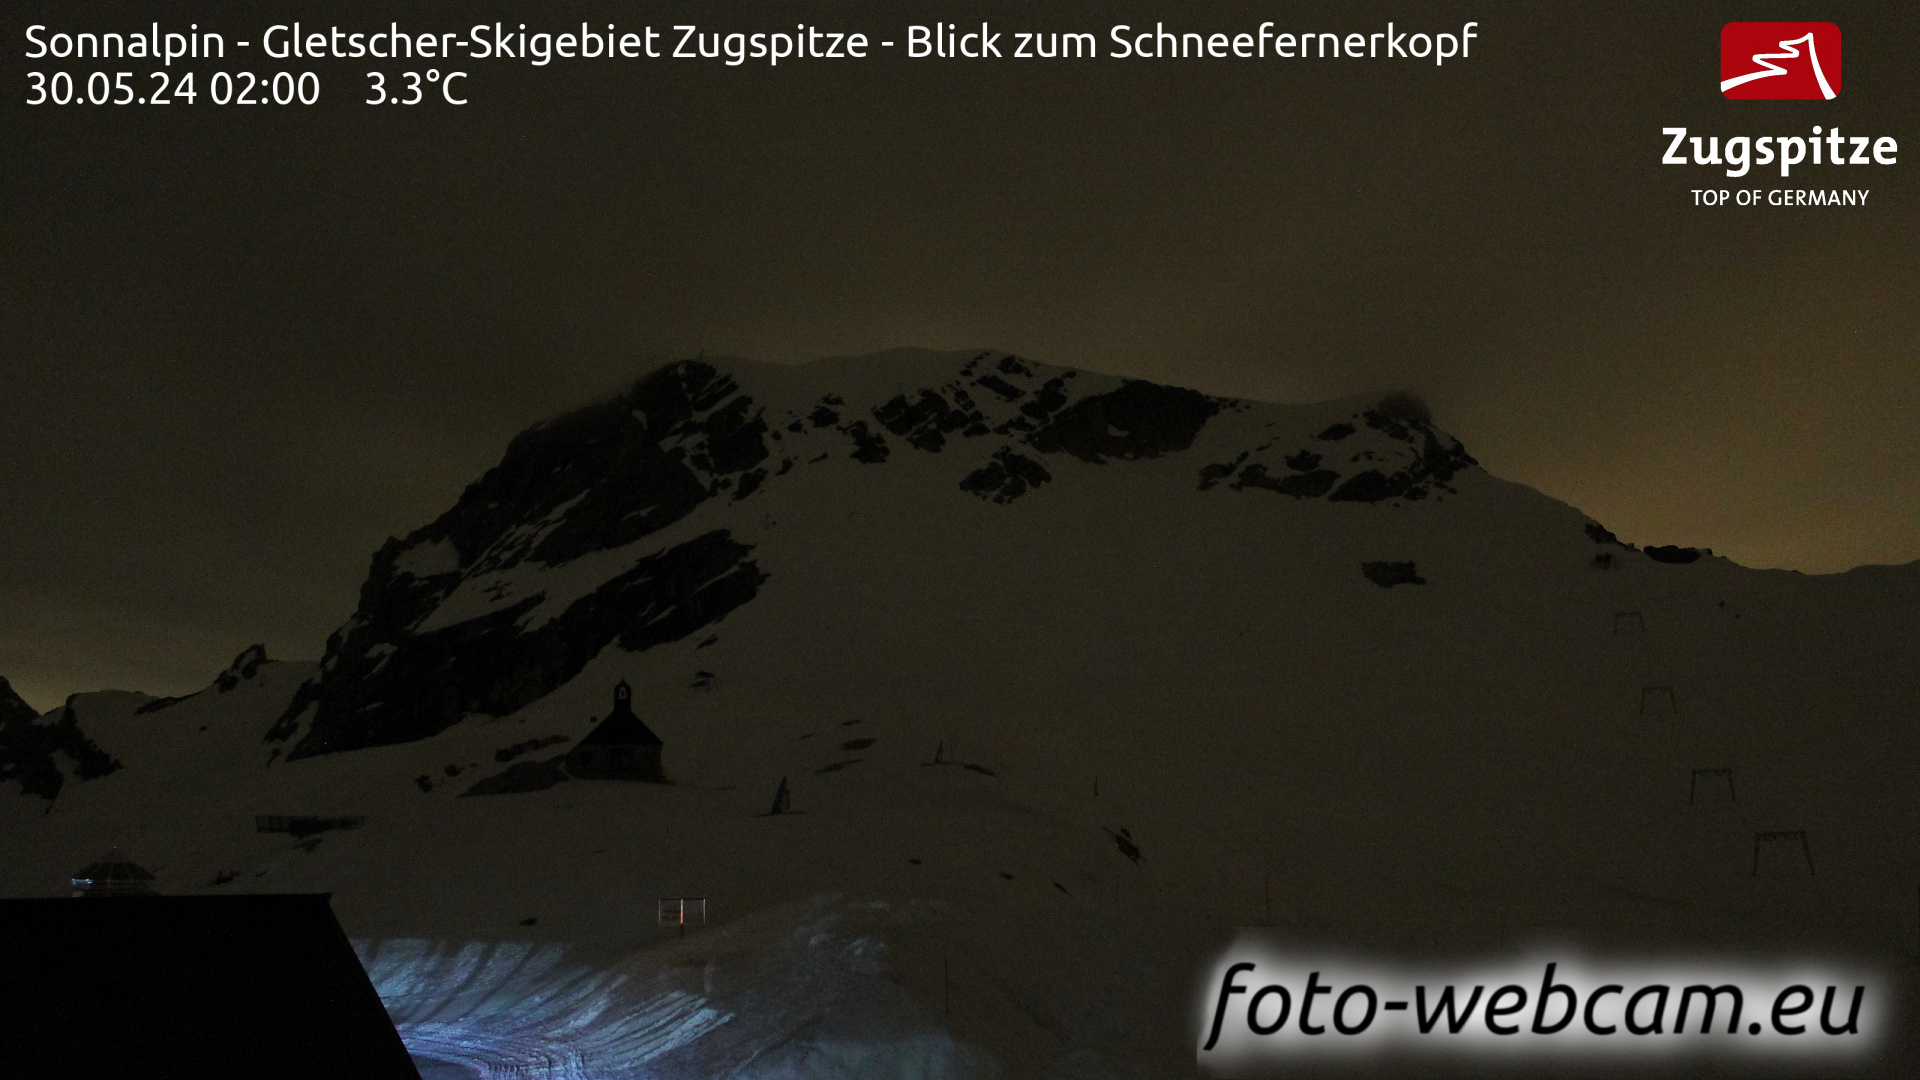 Zugspitze Lun. 02:24